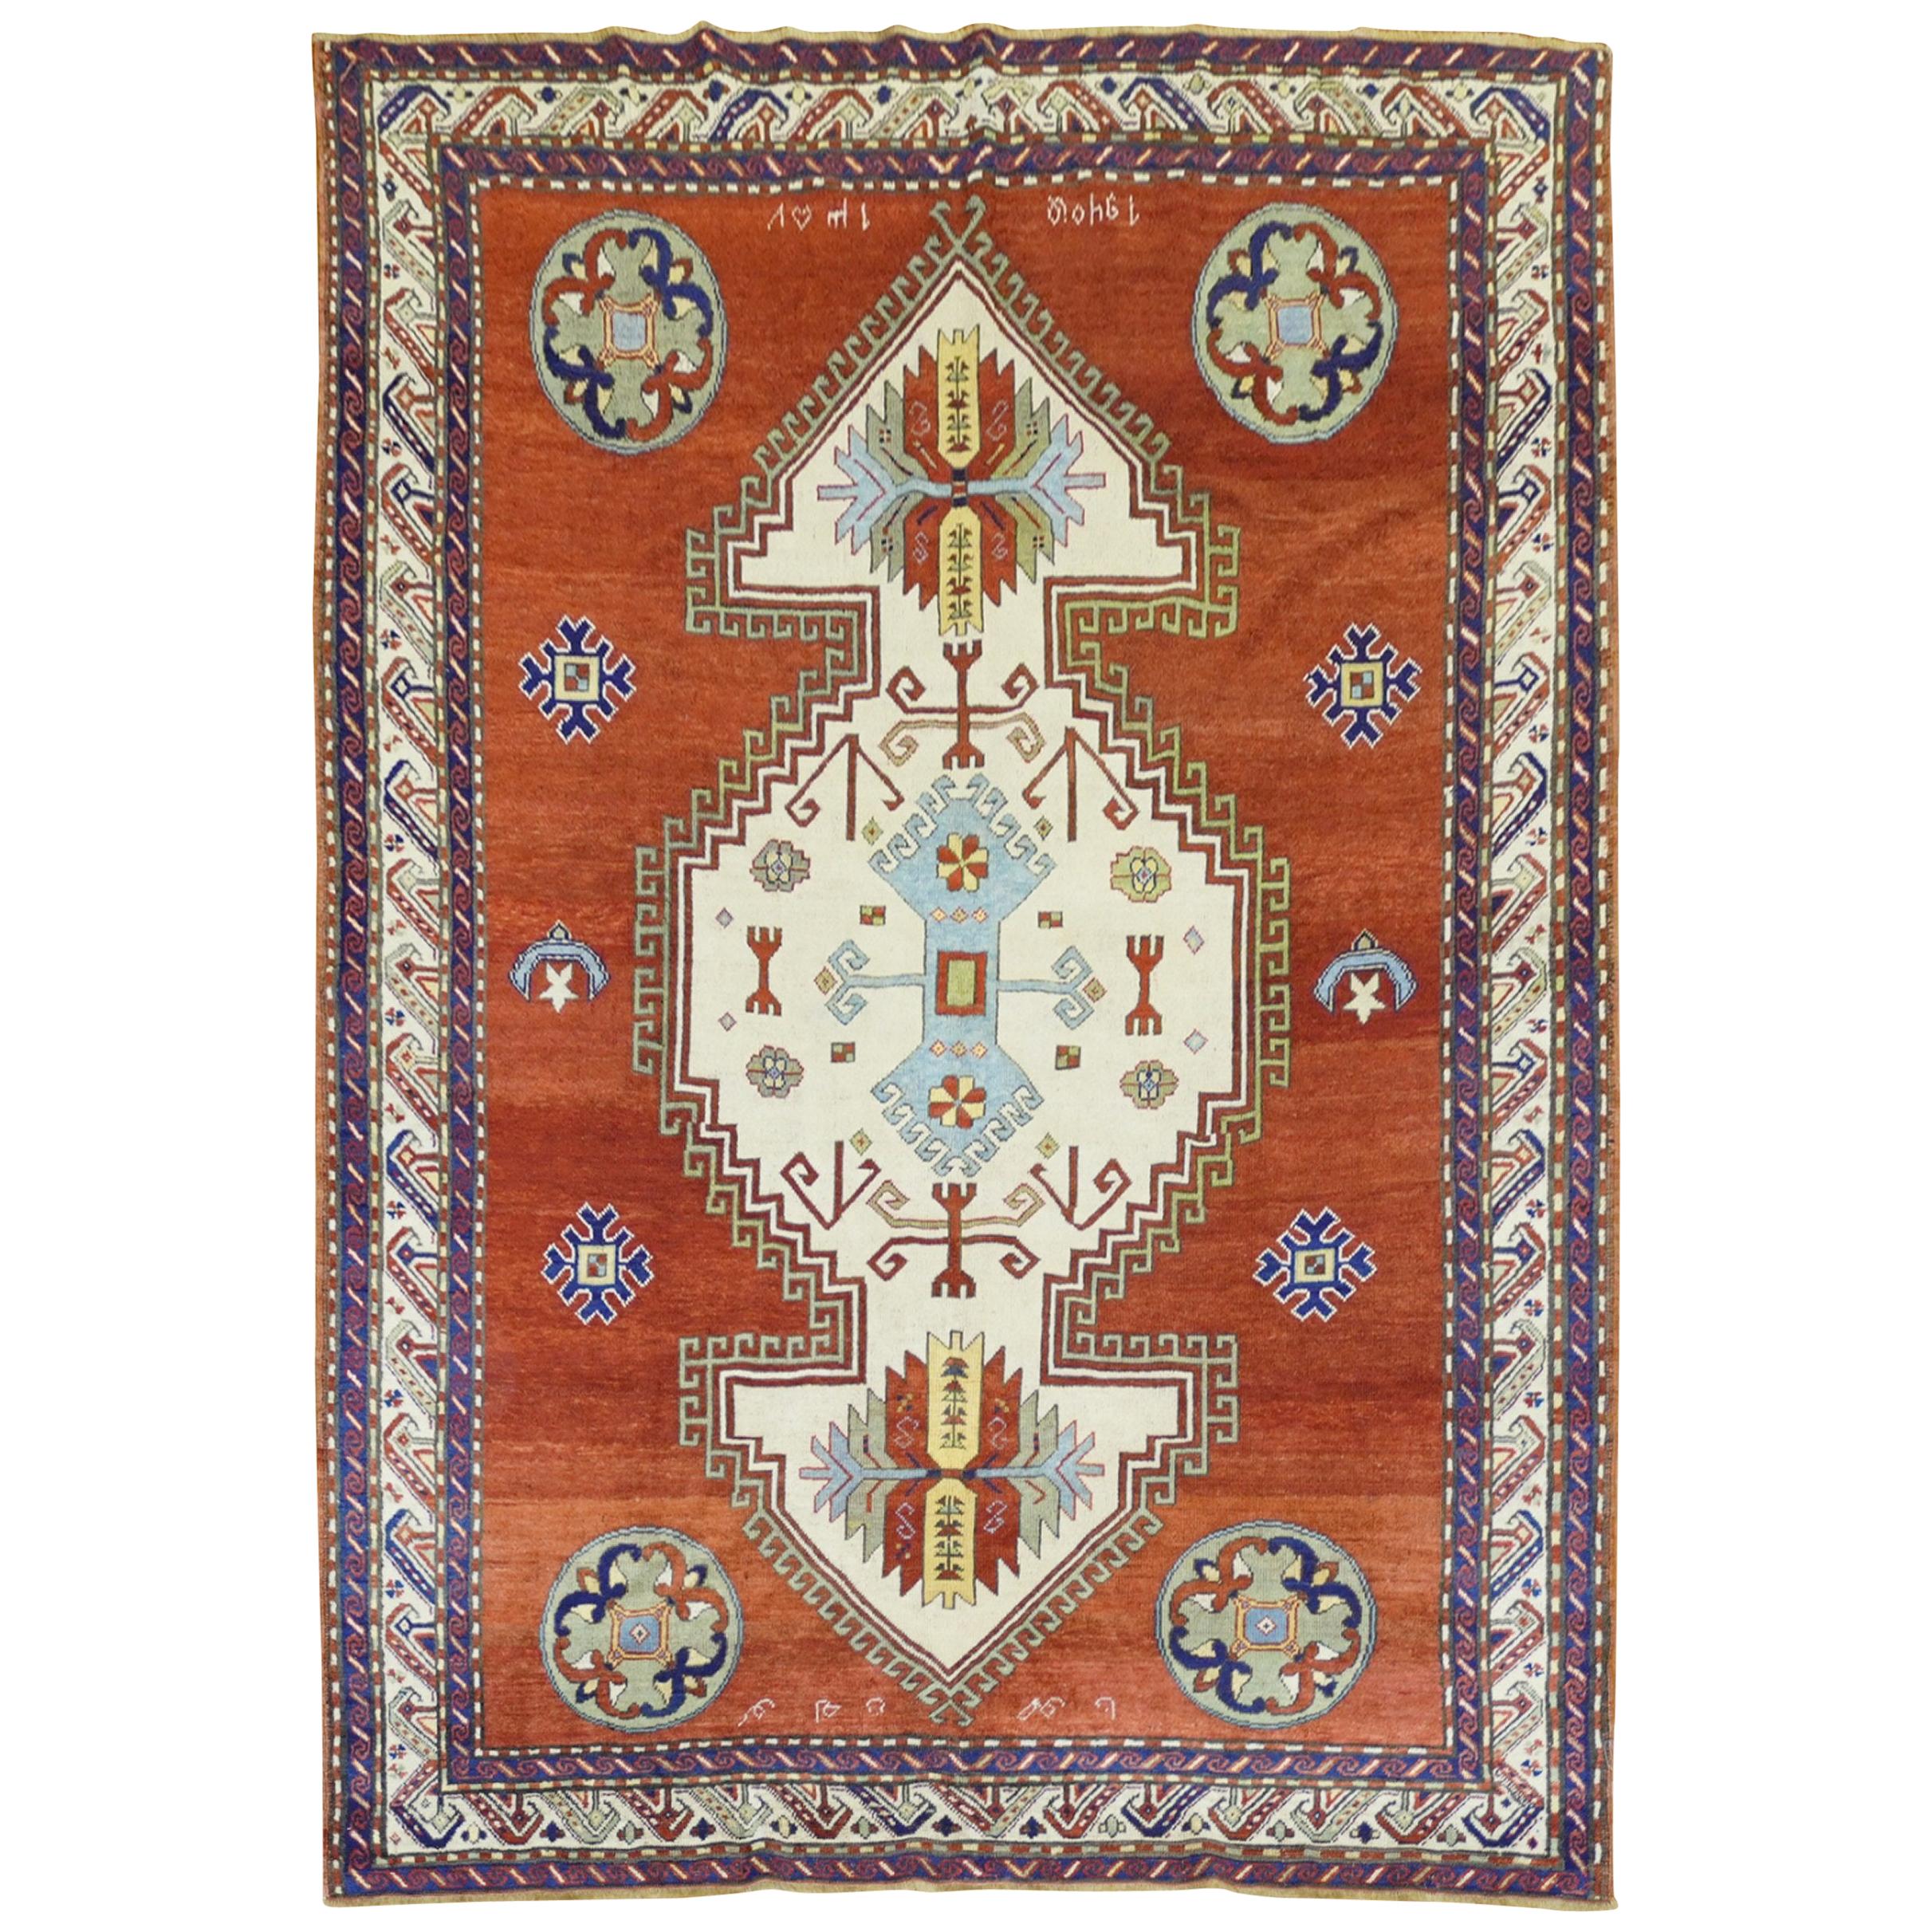 Madder Red Armenianischer antiker Teppich, datiert 1940 im Angebot